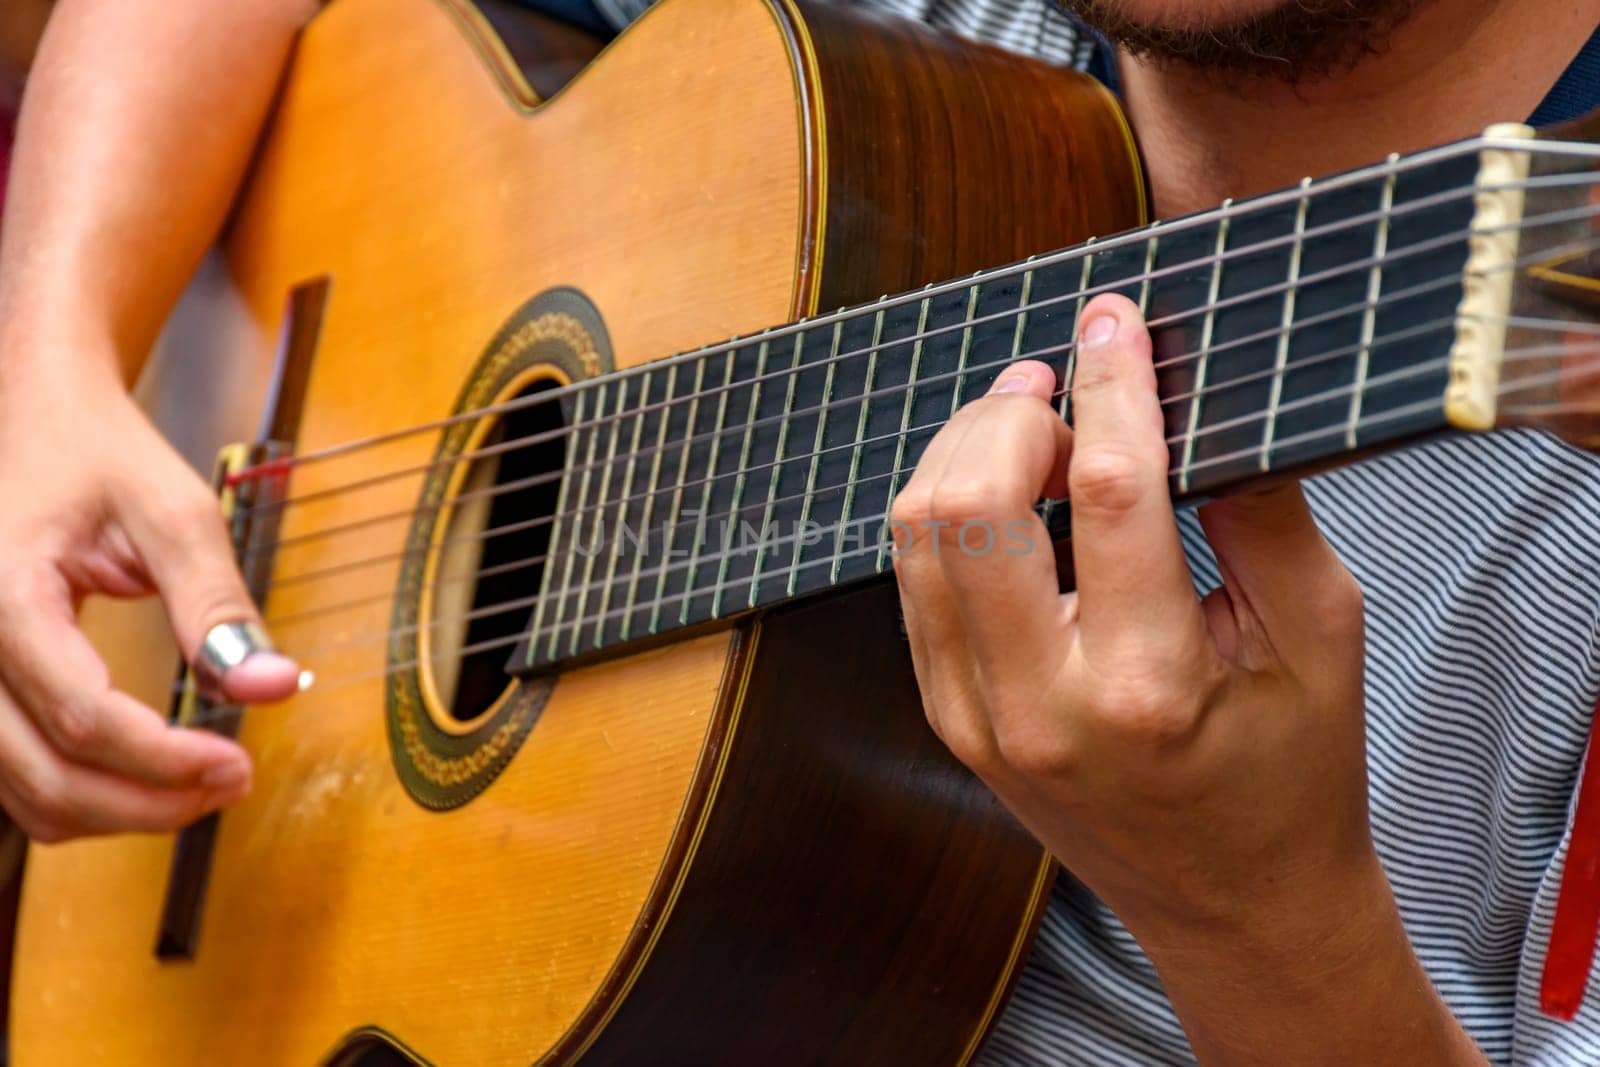 Seven string guitar by Fred_Pinheiro